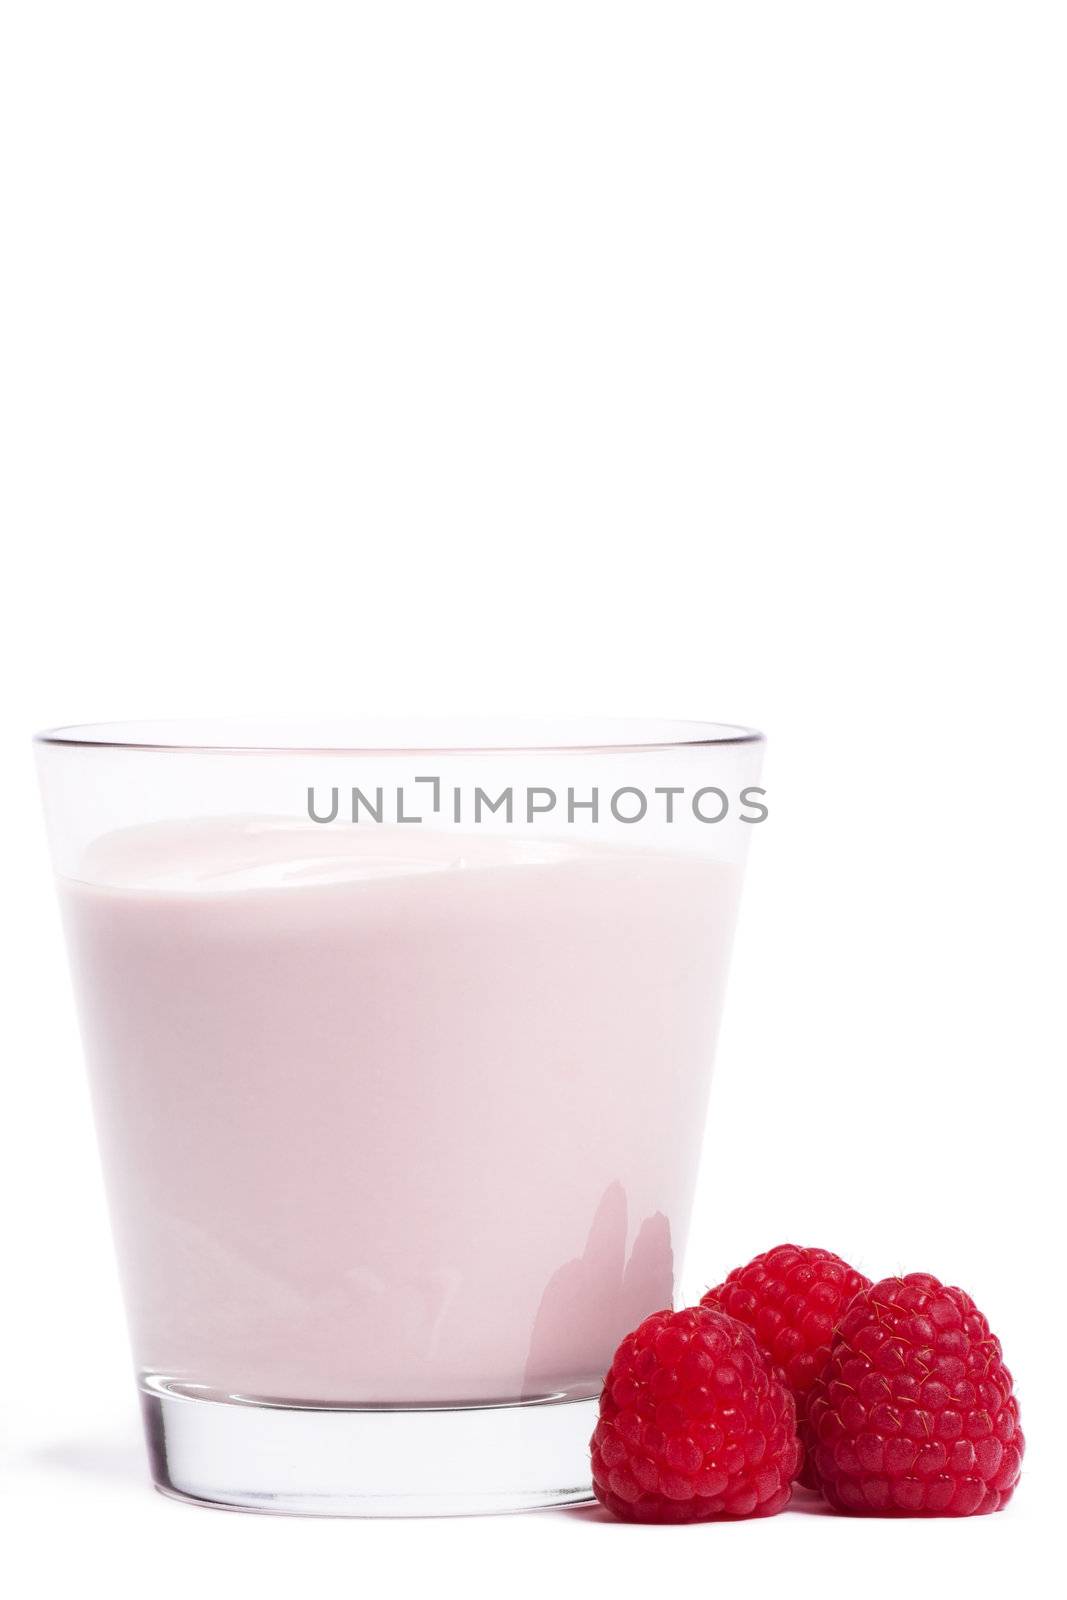 some raspberries near a milkshake on white background